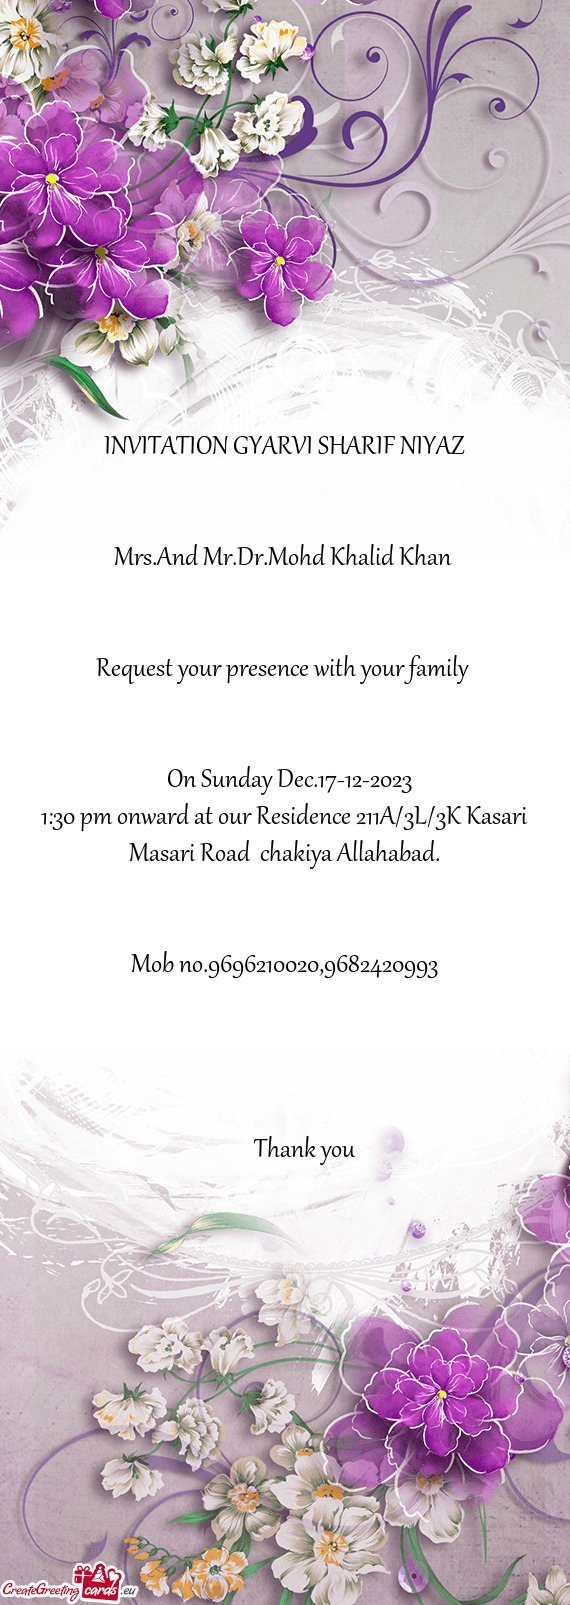 Mrs.And Mr.Dr.Mohd Khalid Khan